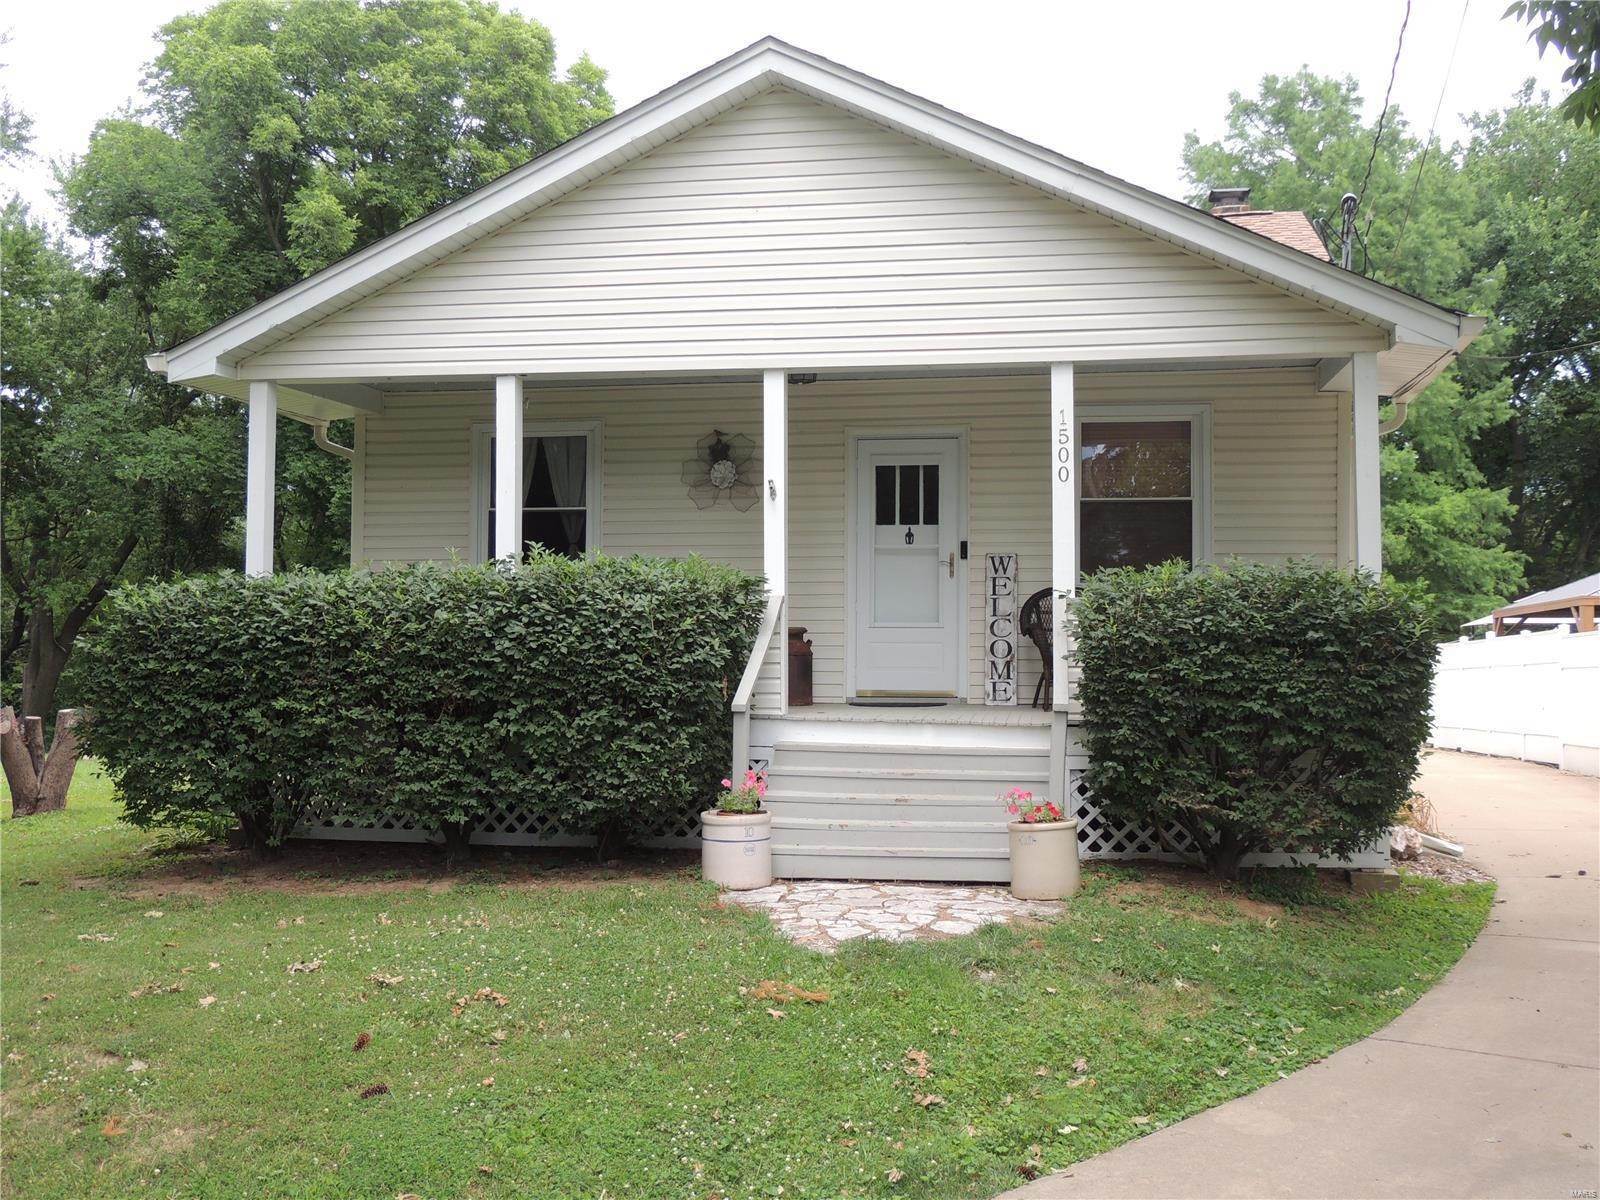 Property for Sale at 1500 N Elizabeth Avenue St. Louis, Missouri 63135 United States